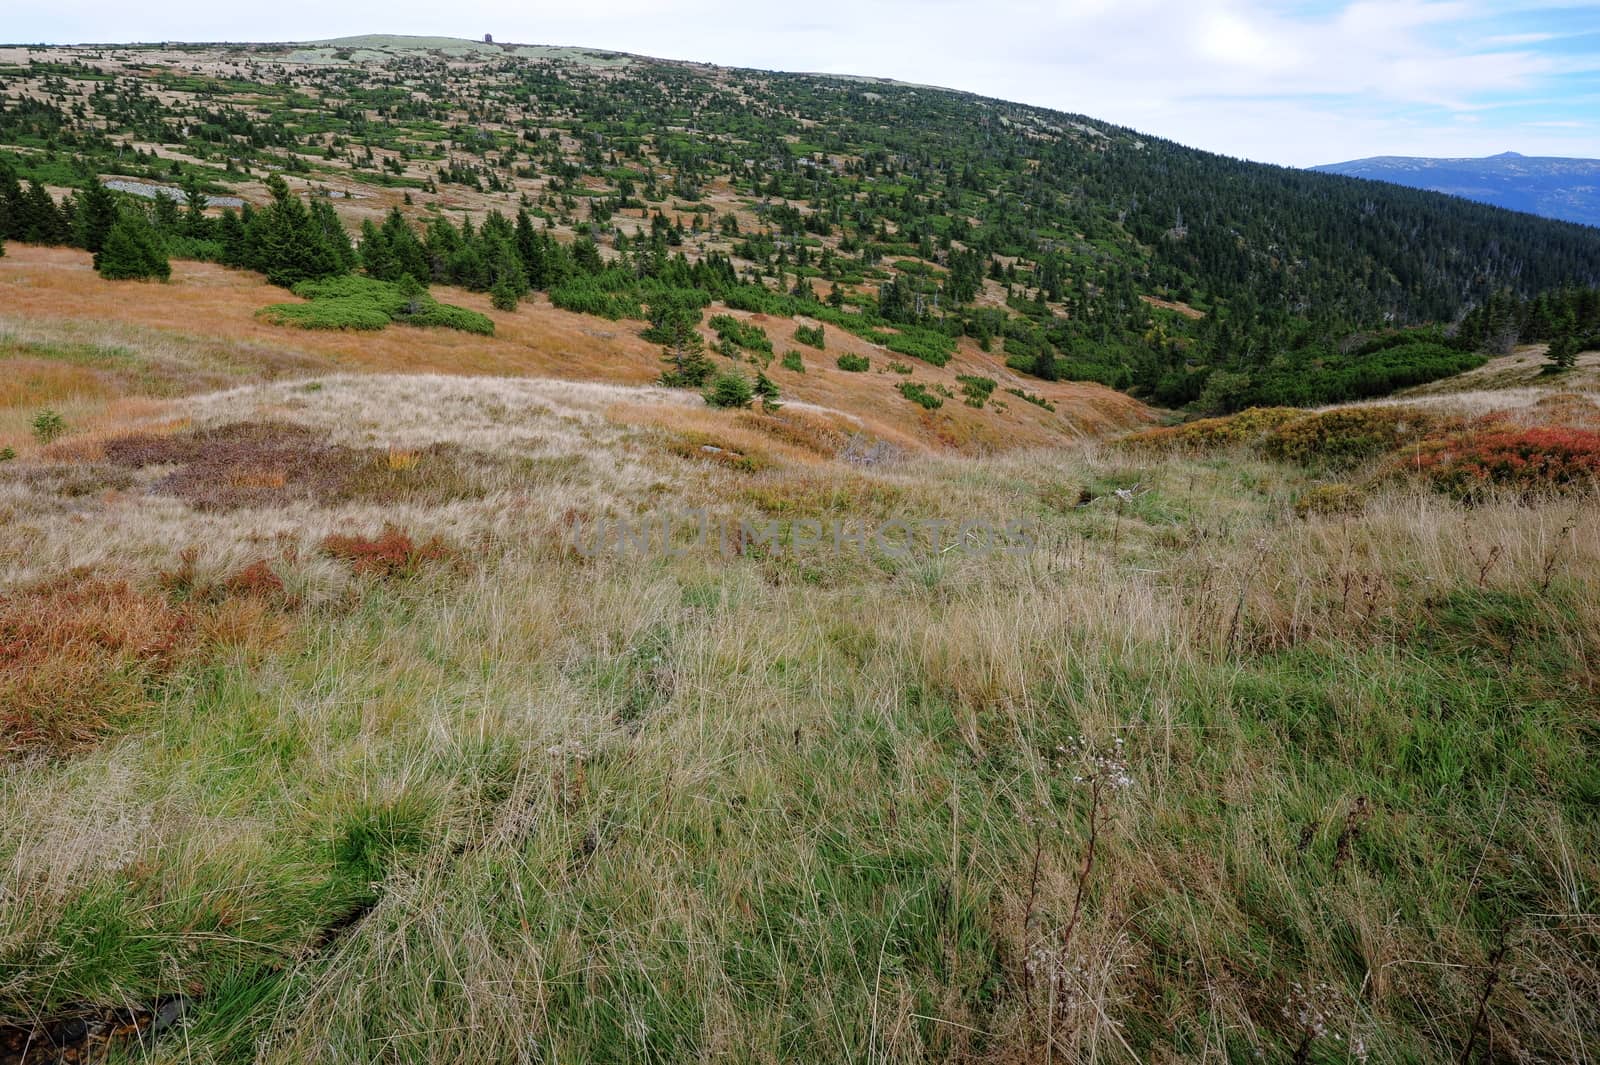 View of the rocky landscape of the Krkonose